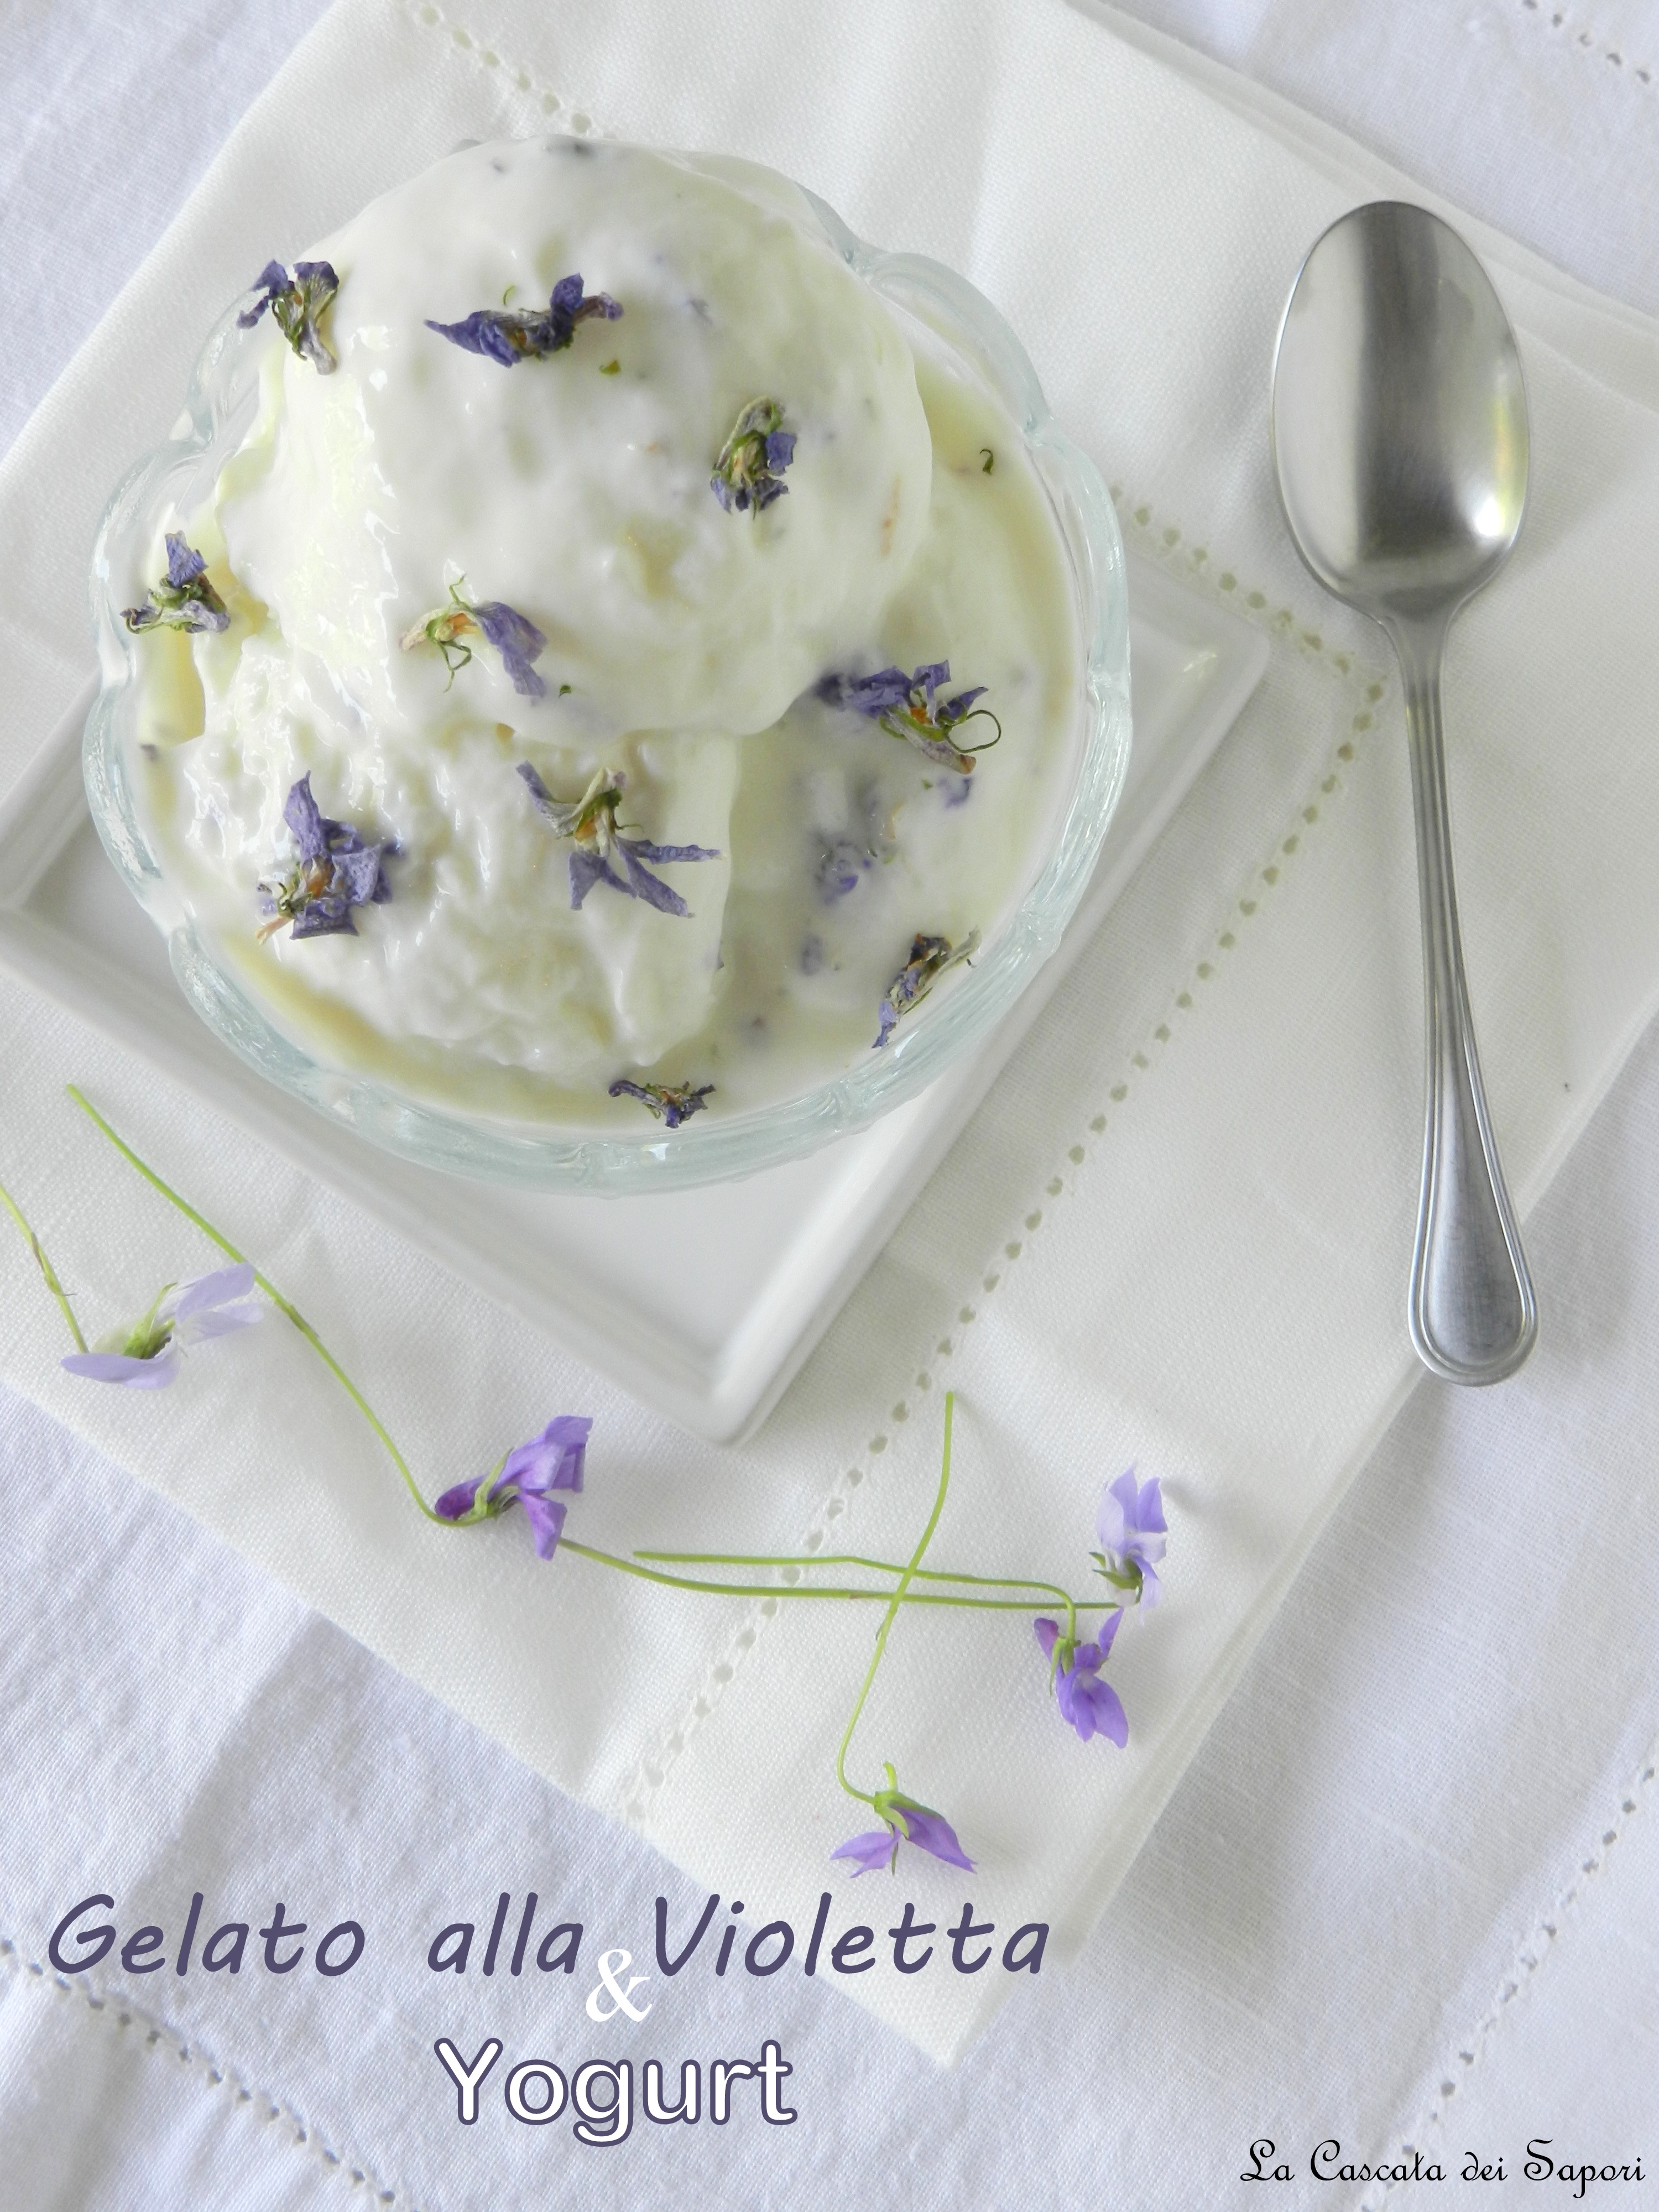 Gelato alla Violetta & Yogurt